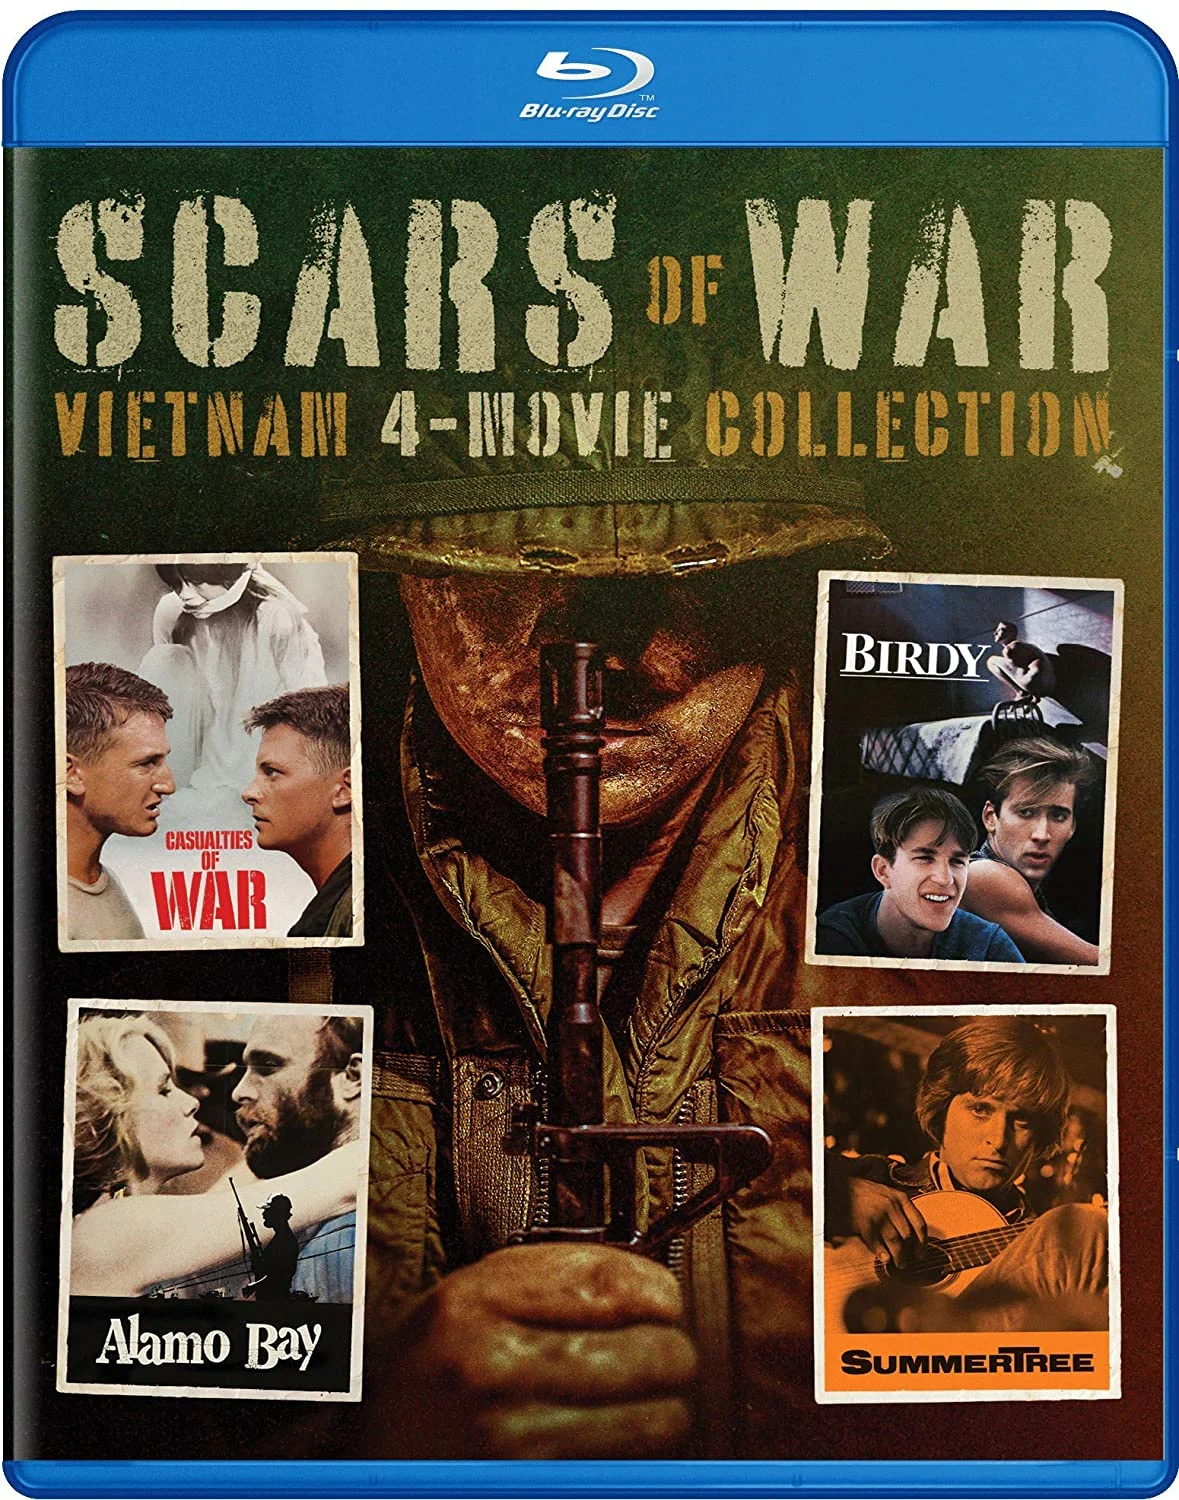 Scars of War: 4 Vietnam Stories (Blu-ray) on MovieShack